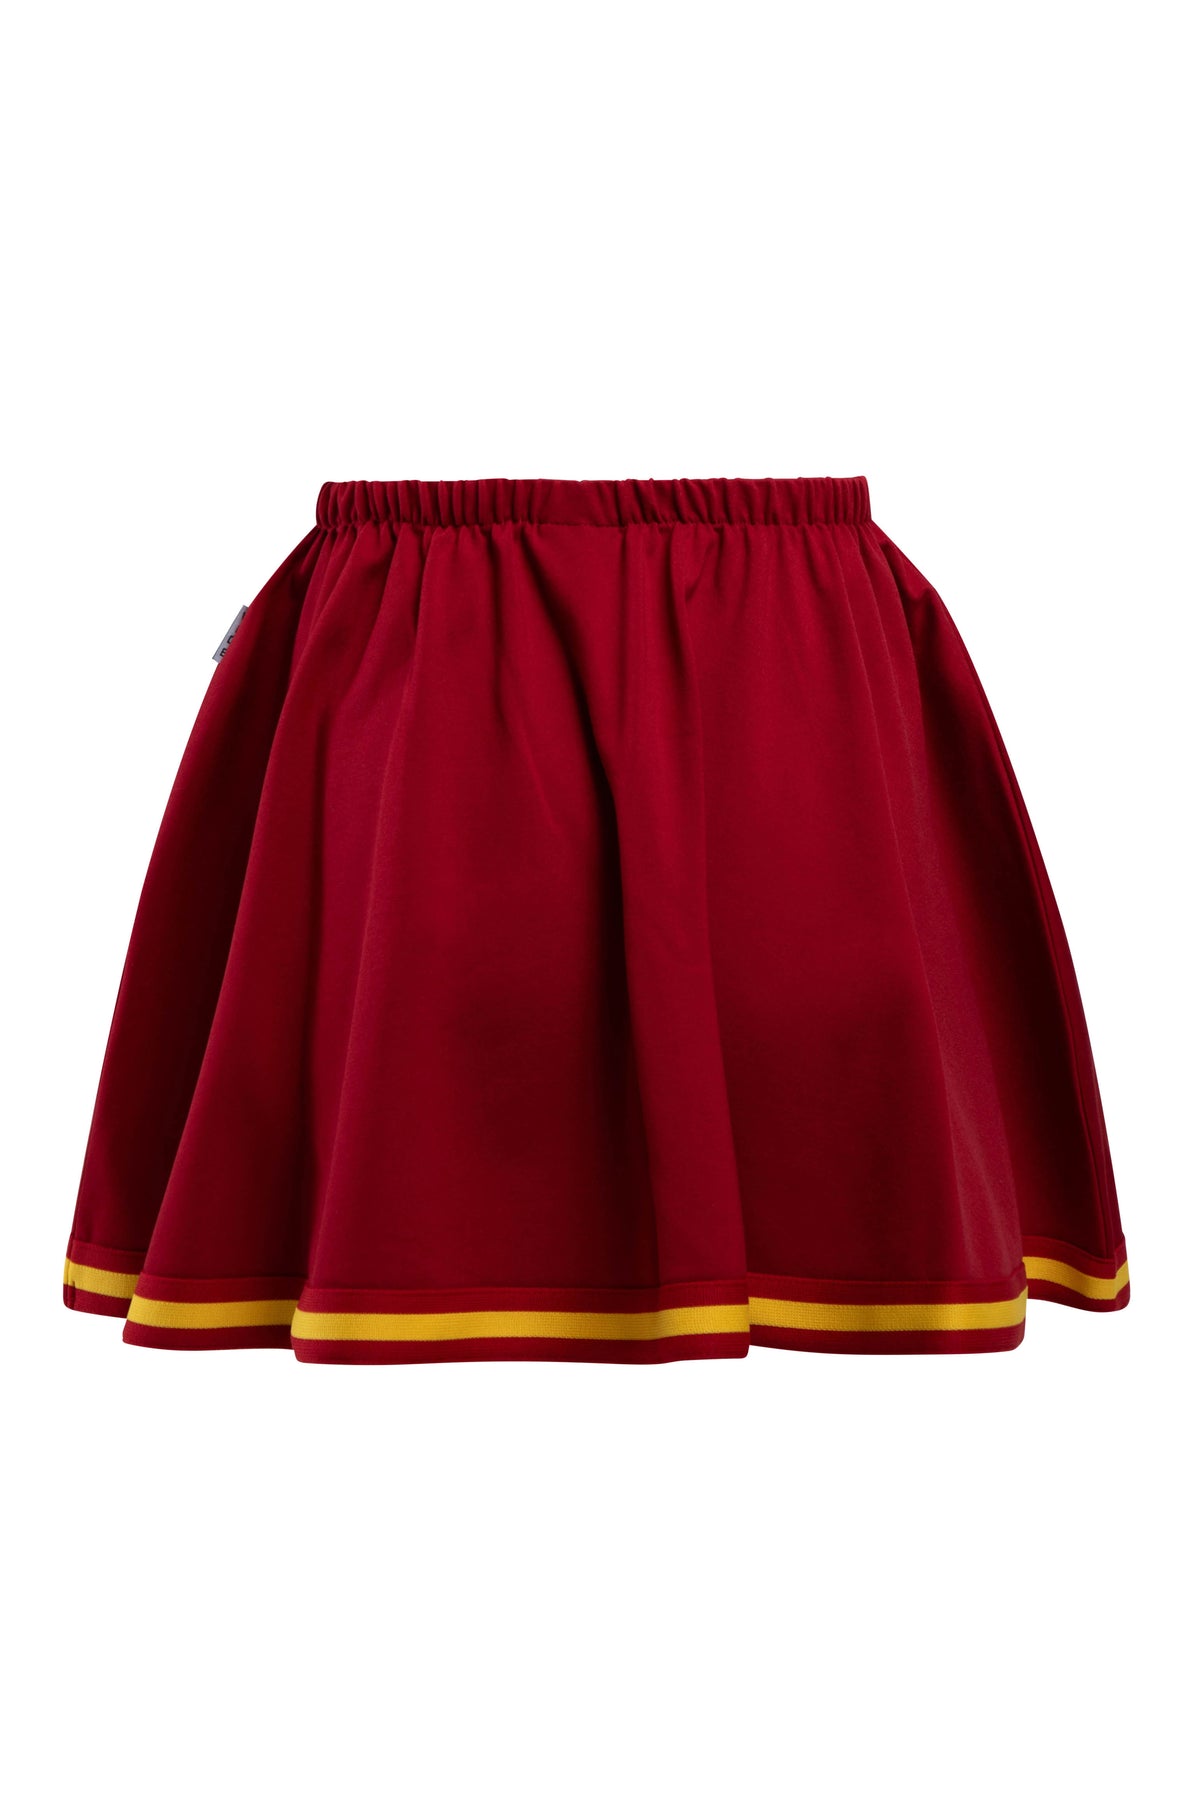 Cardinal and Gold Vintage Skirt